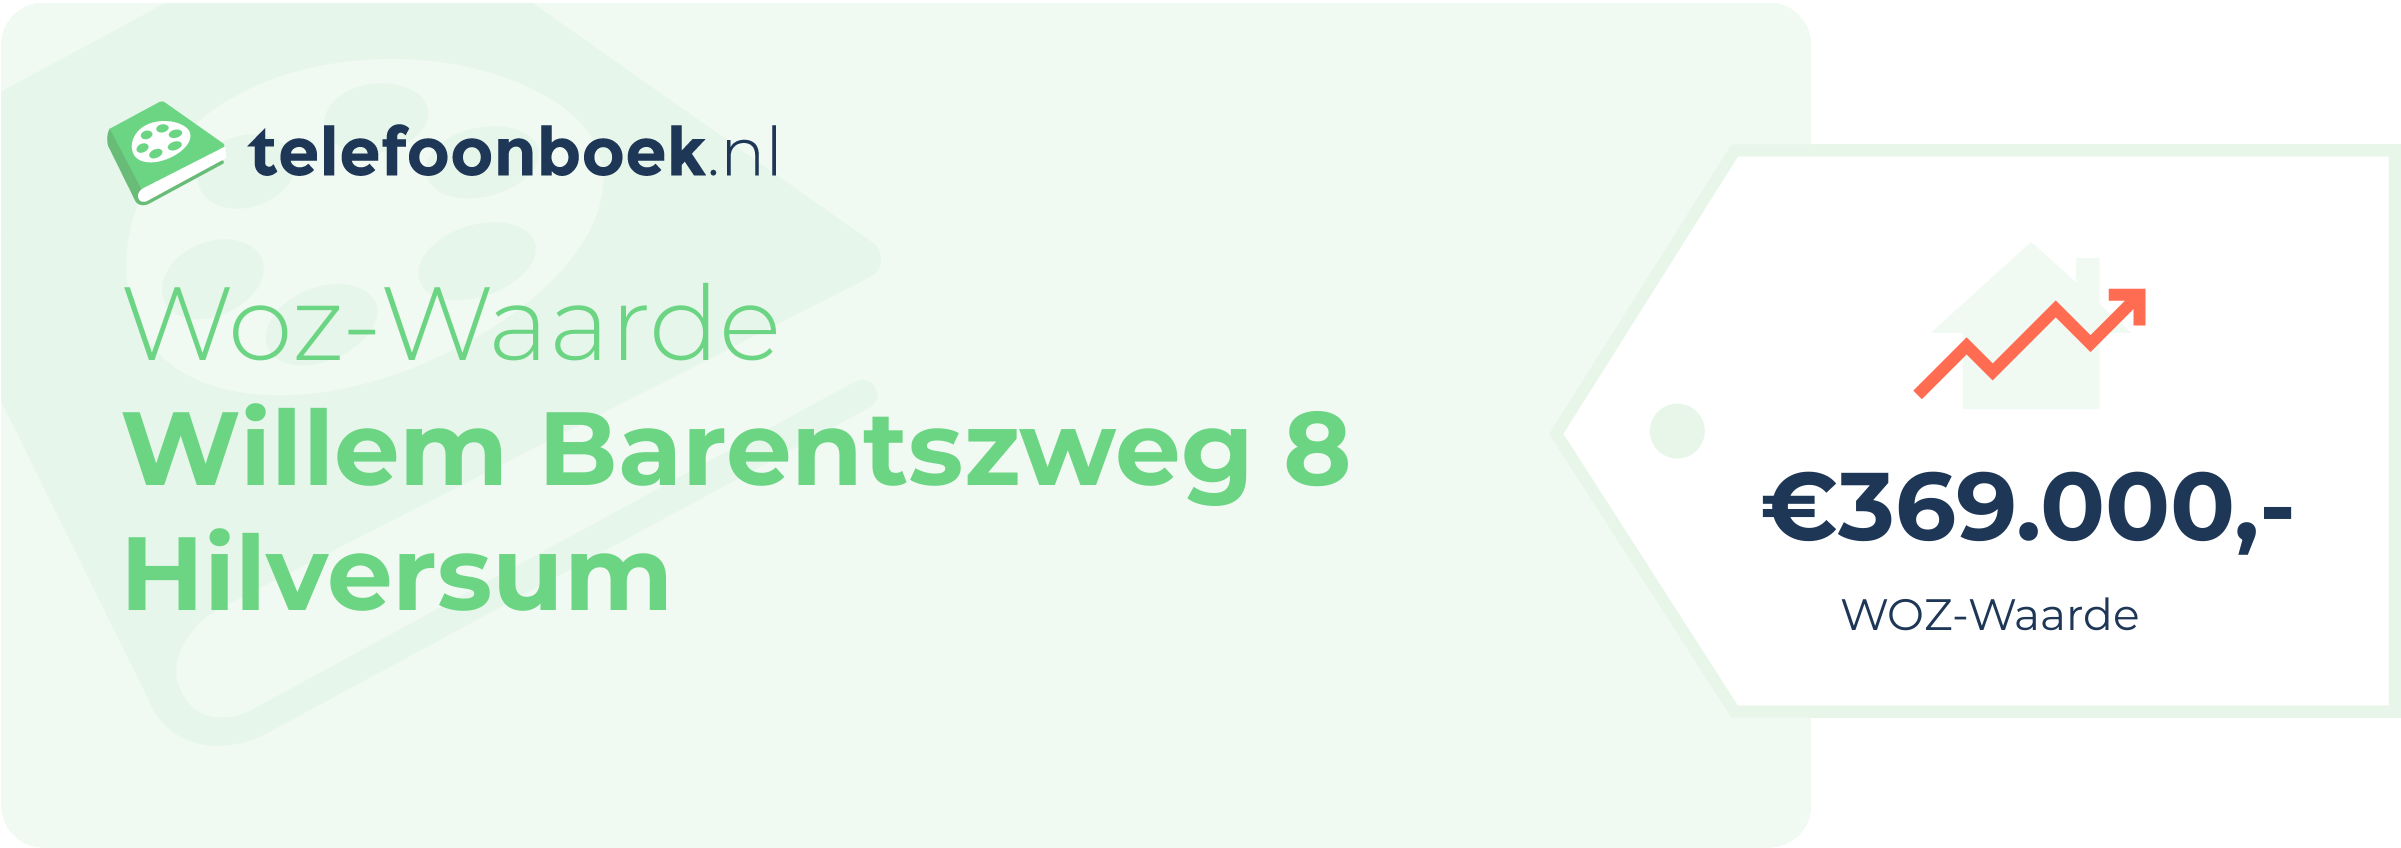 WOZ-waarde Willem Barentszweg 8 Hilversum